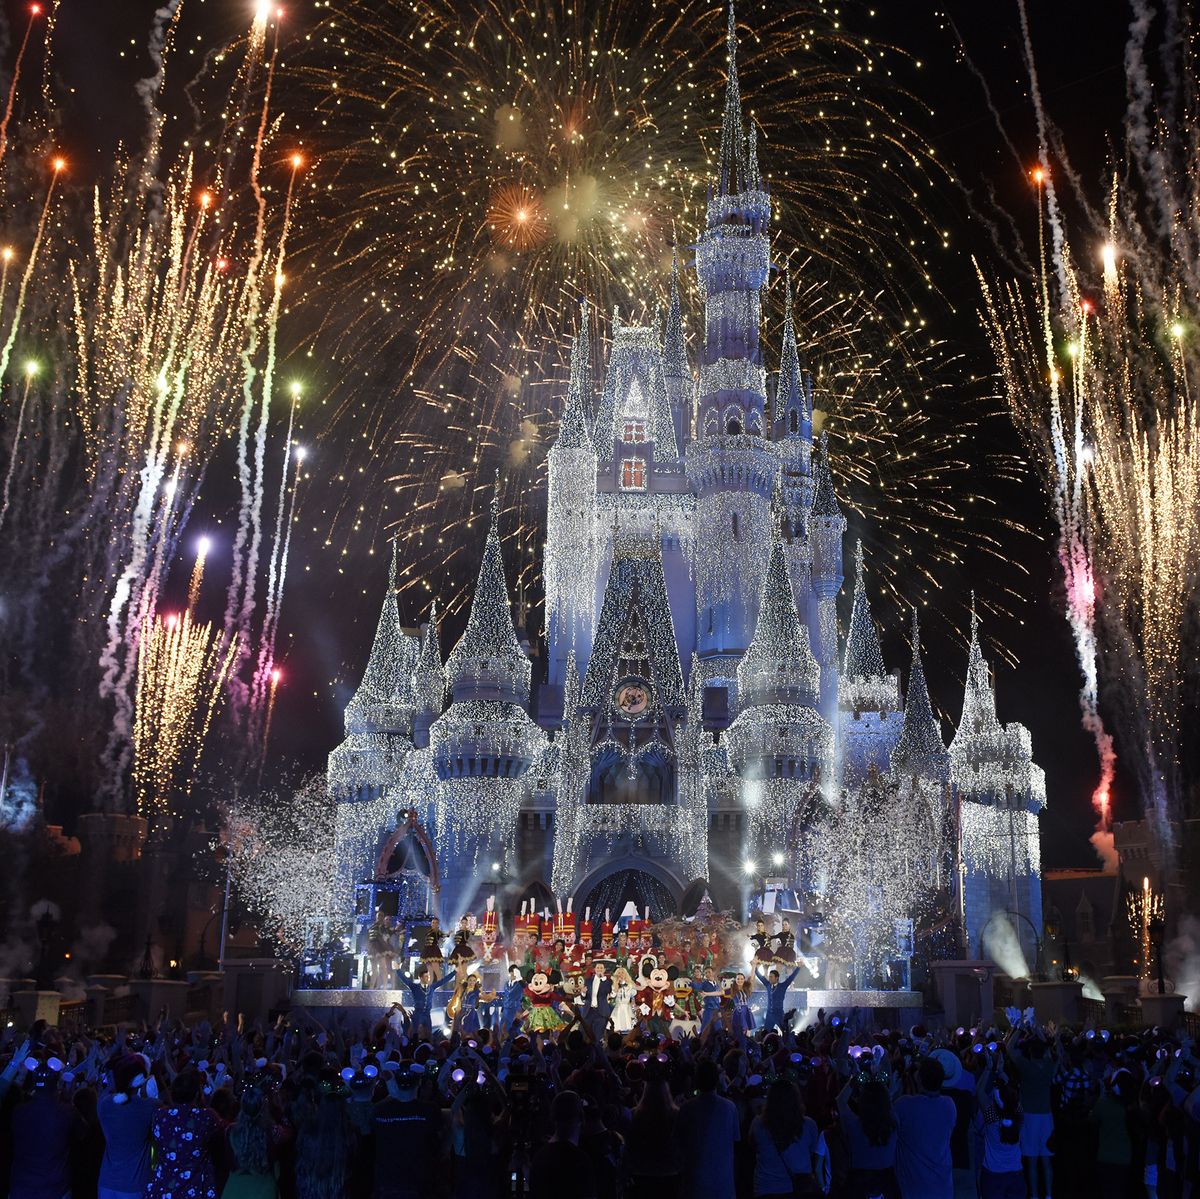 Disney Parks Presents a Disney Channel Holiday Celebration